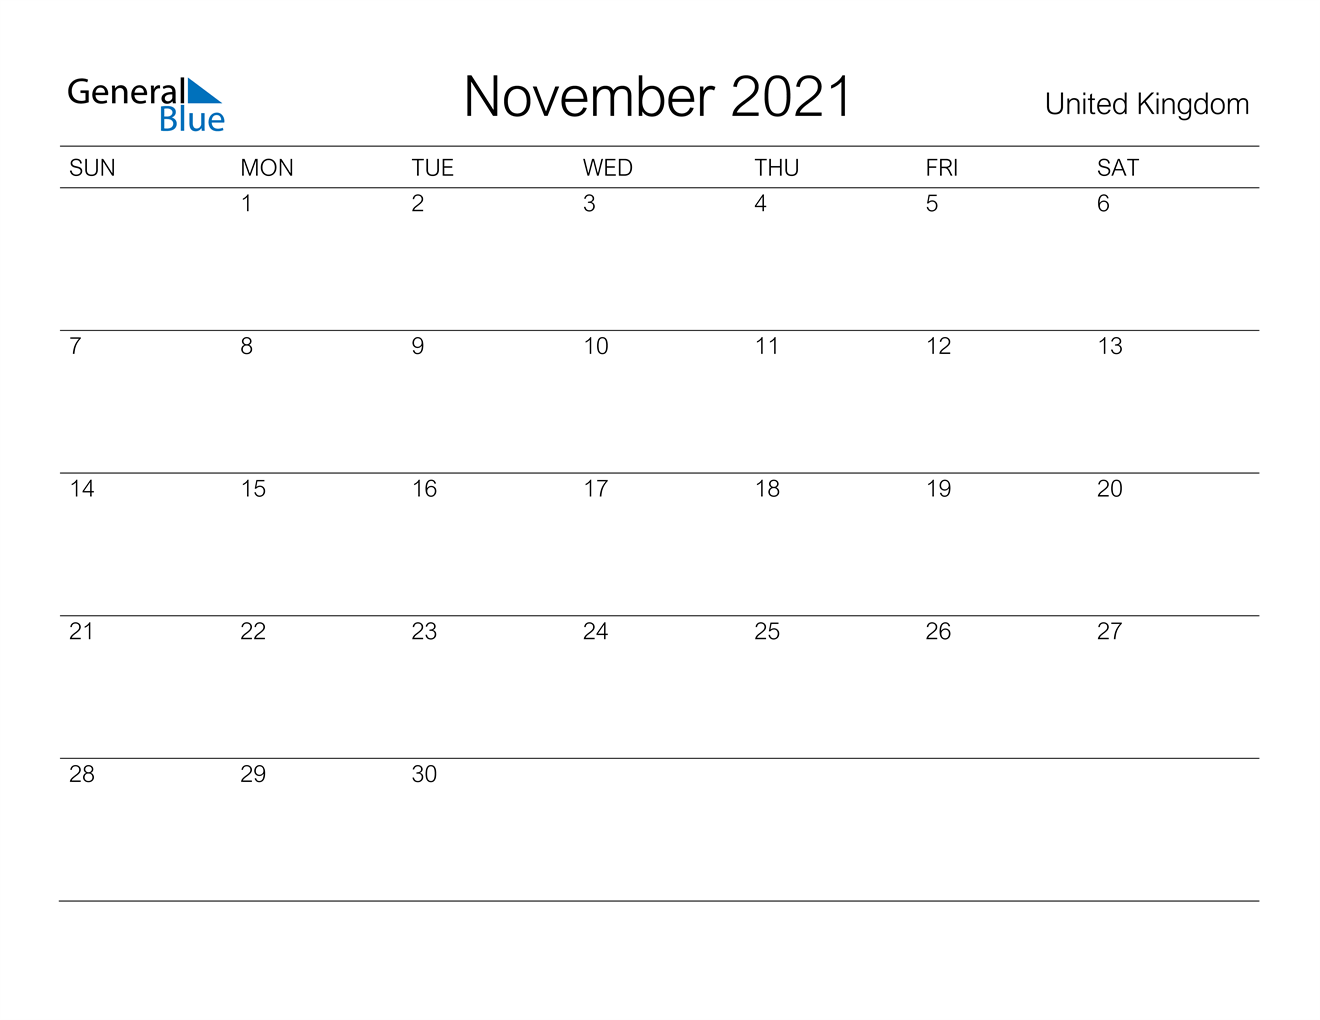 November 2021 Calendar - United Kingdom